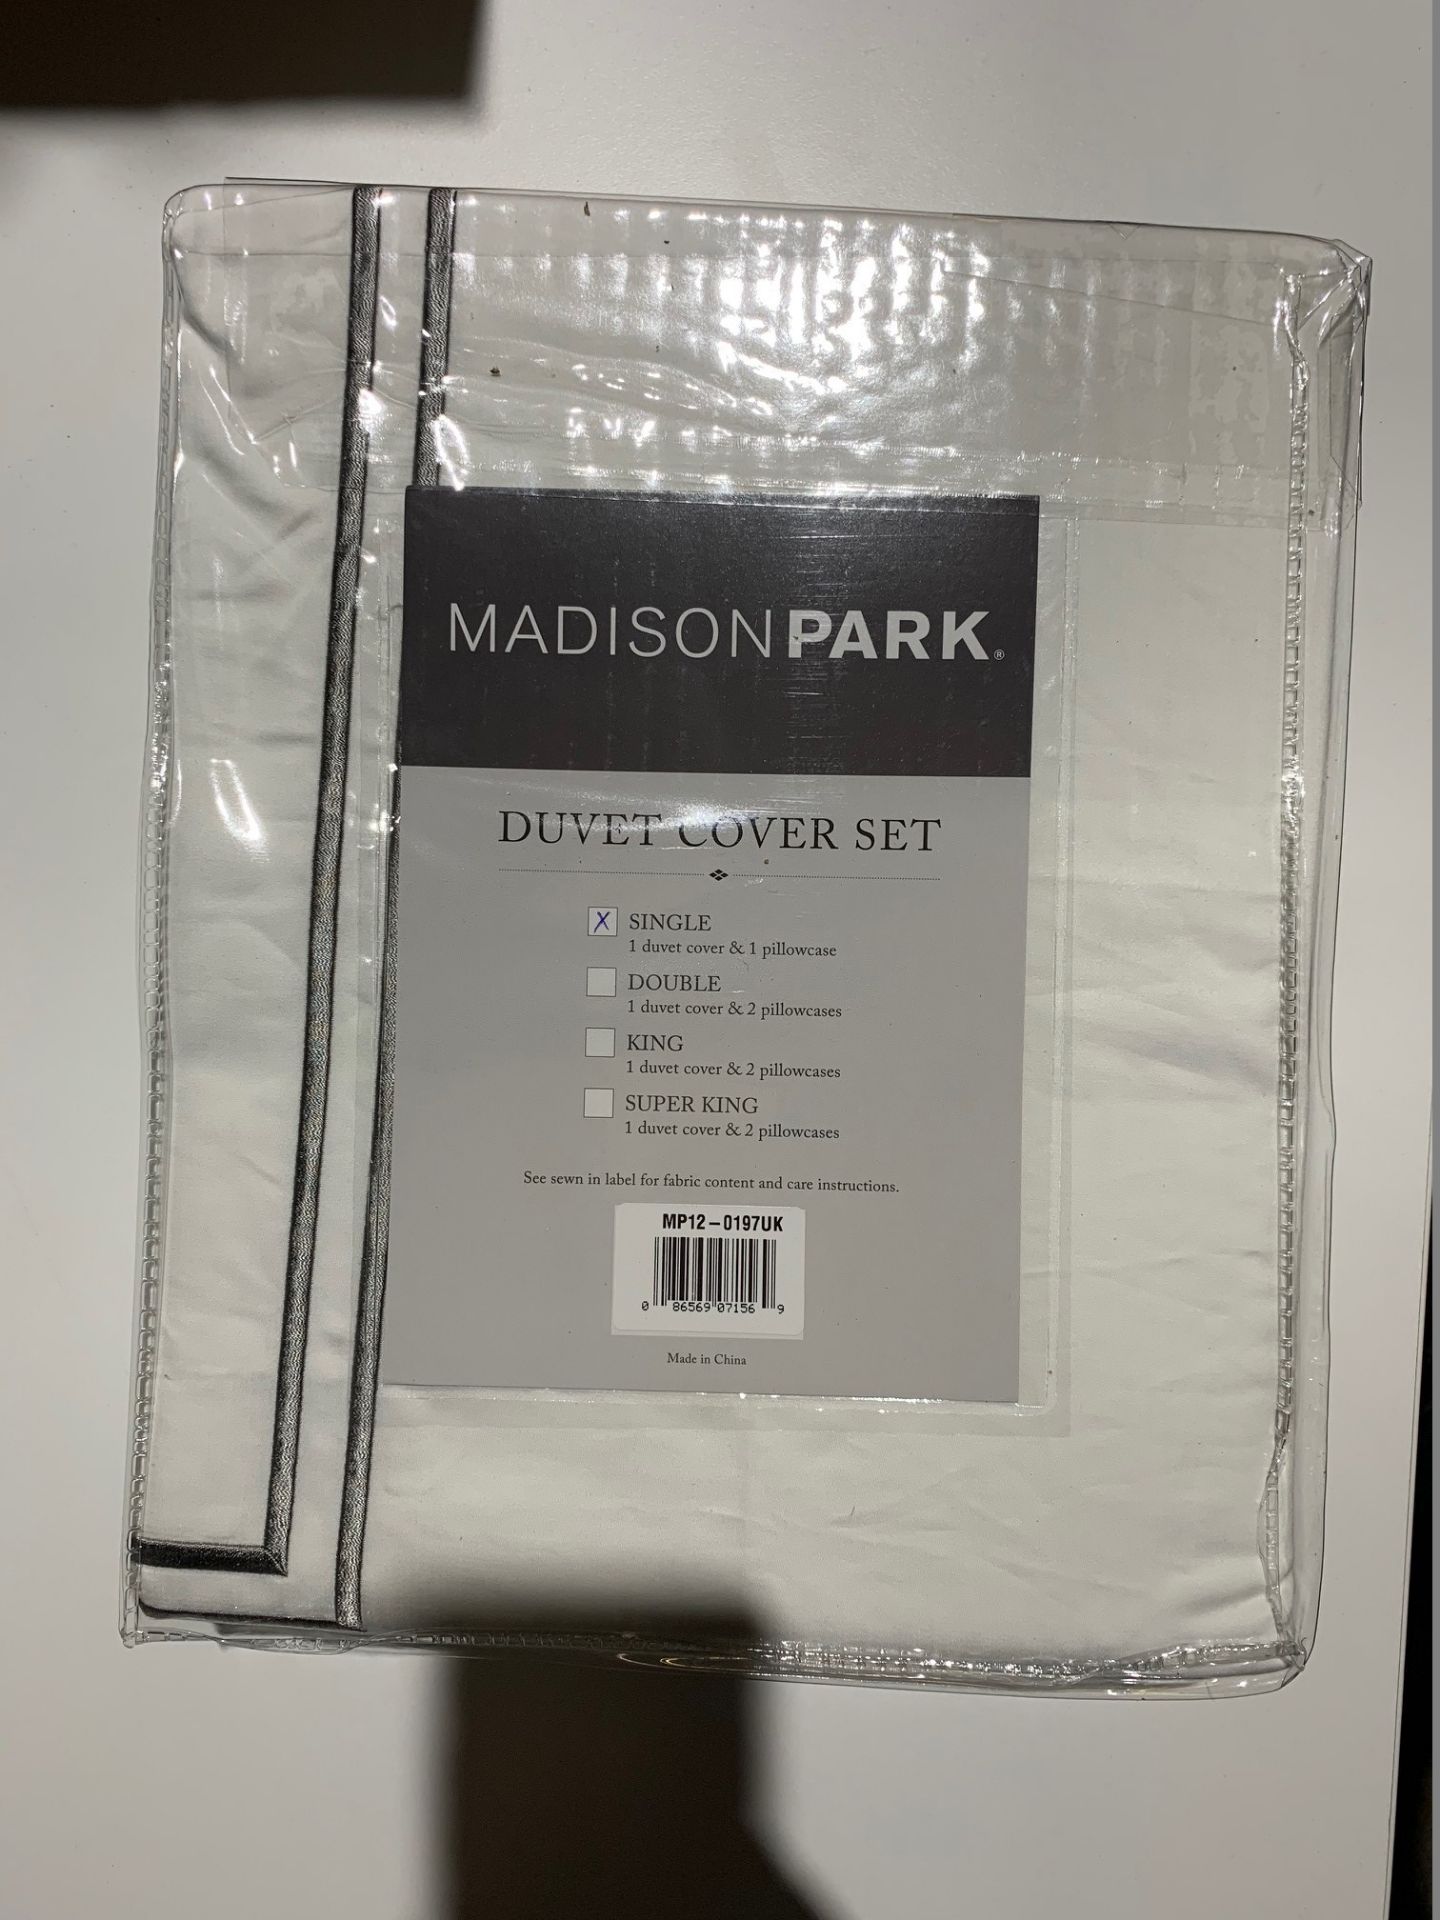 1 x Madison Park Luxury Collection Single Duvet Set White - Product Code MP12-0197UK (Brand New - - Image 2 of 2